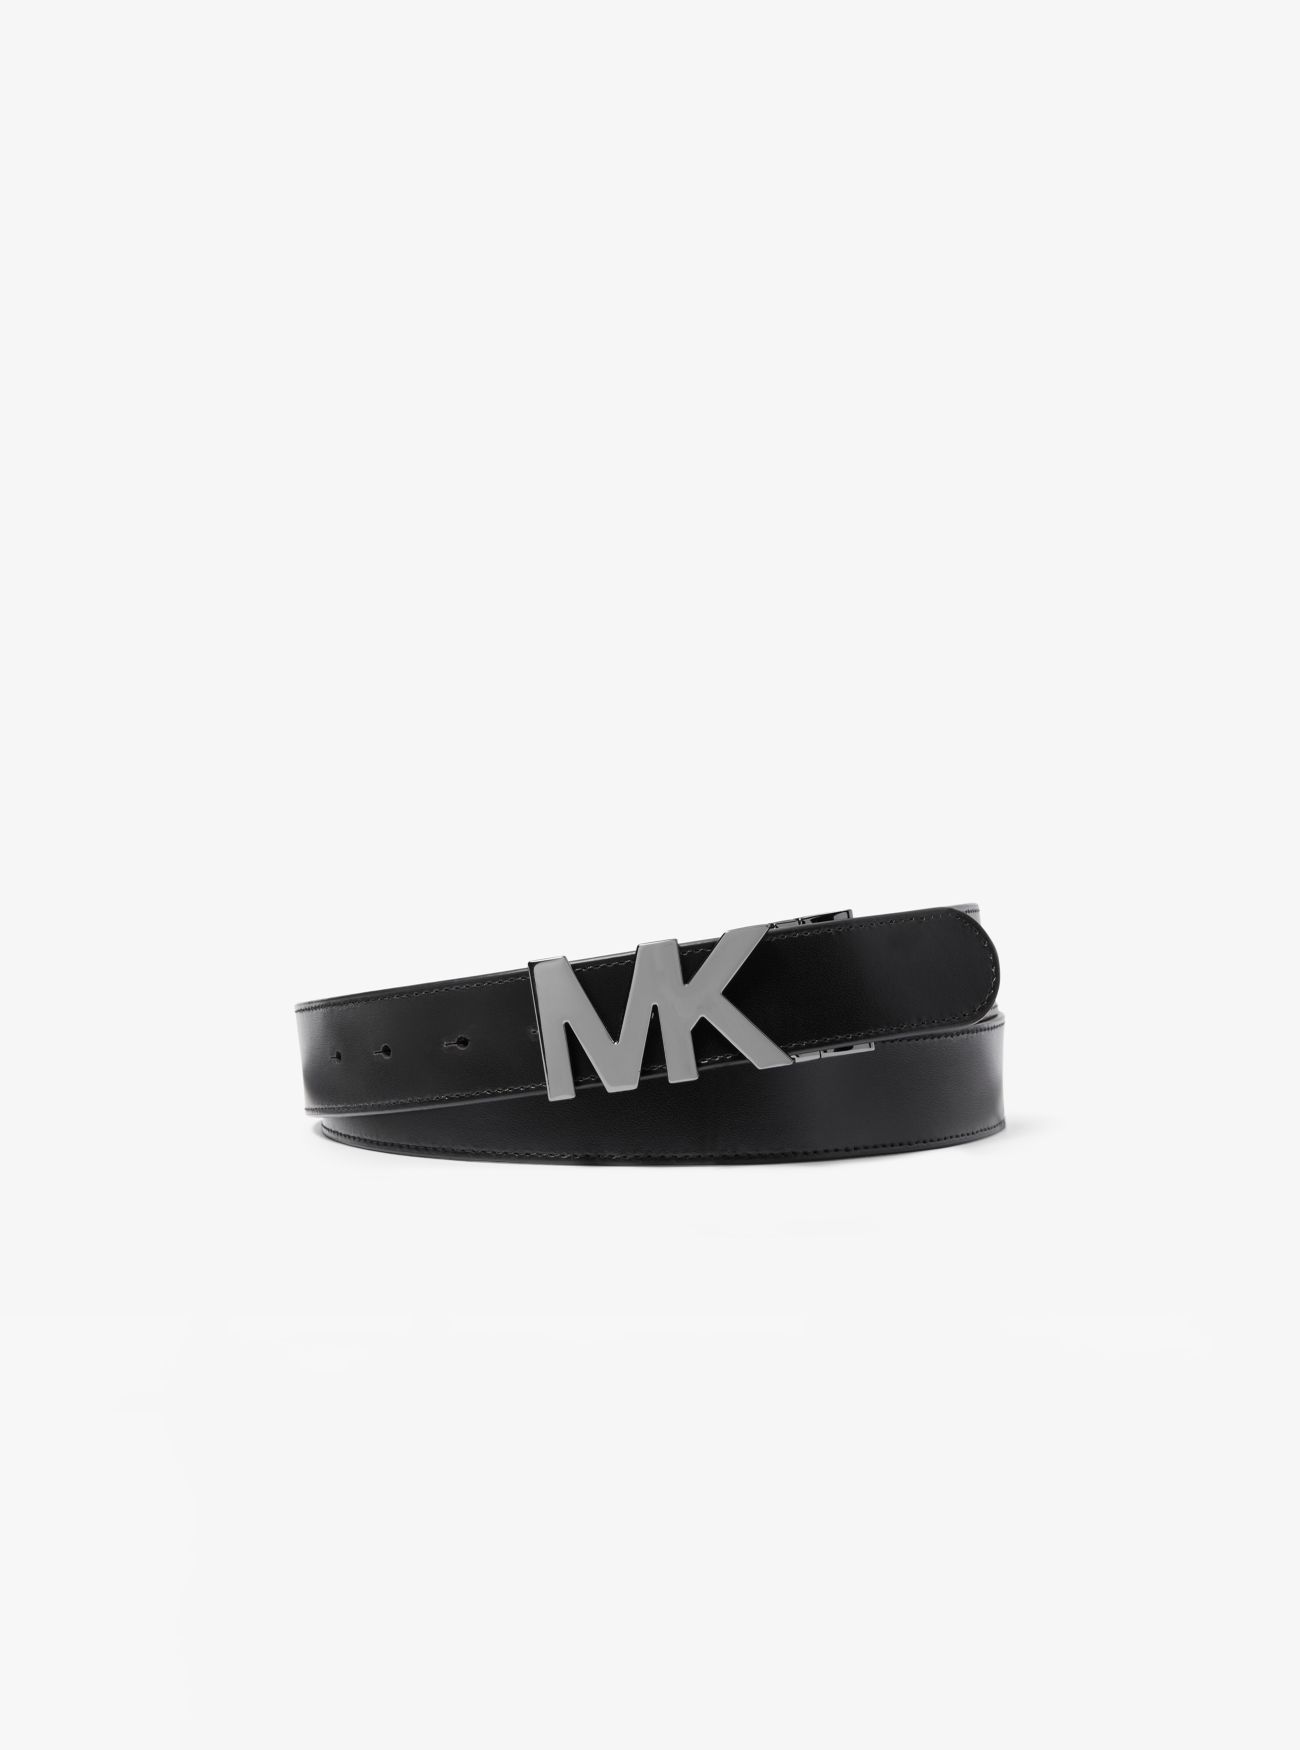 MK Reversible Logo Buckle Belt - Black - Michael Kors